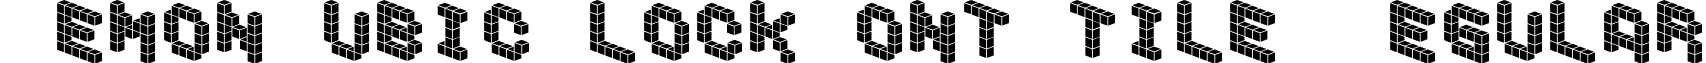 DemonCubicBlockFont Tile Regular cubicblock_t.ttf